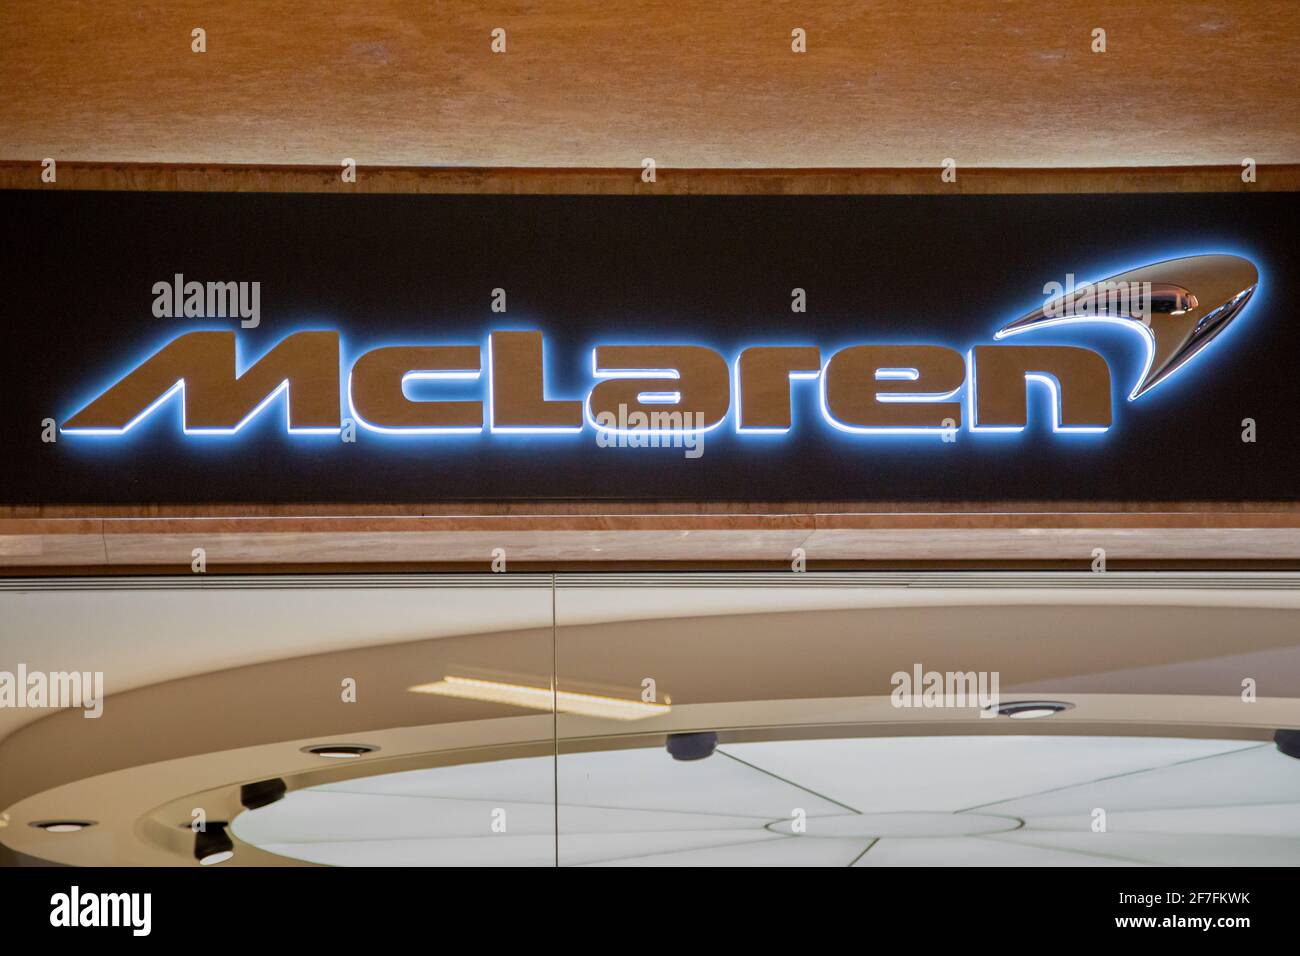 McLaren showroom logo Stock Photo - Alamy